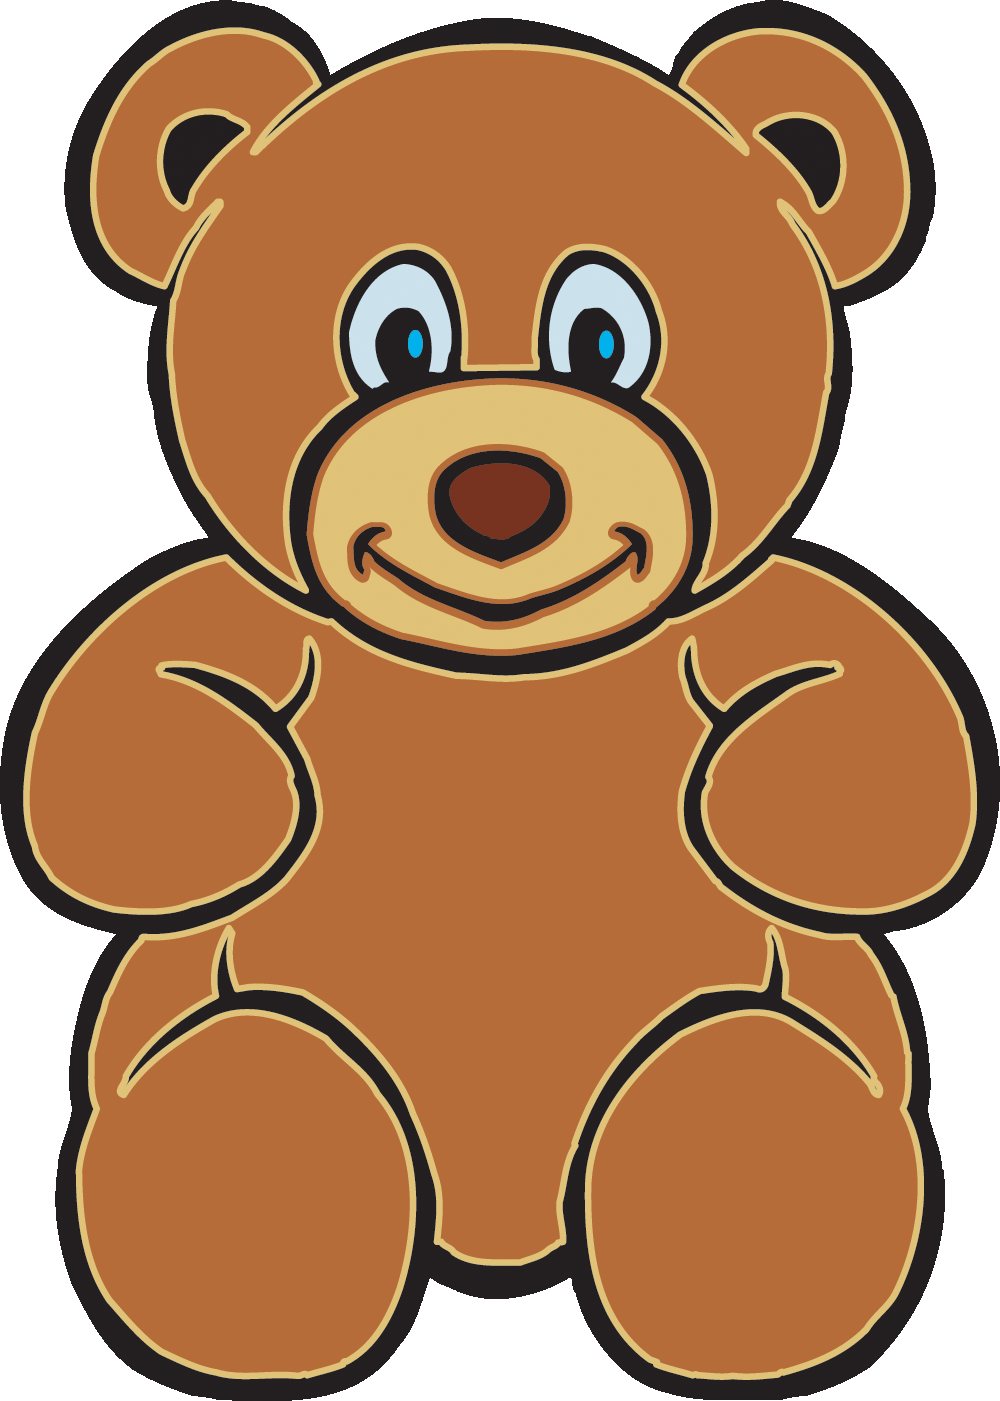 Teddy clipartion com clipartix. Bear clipart clip art